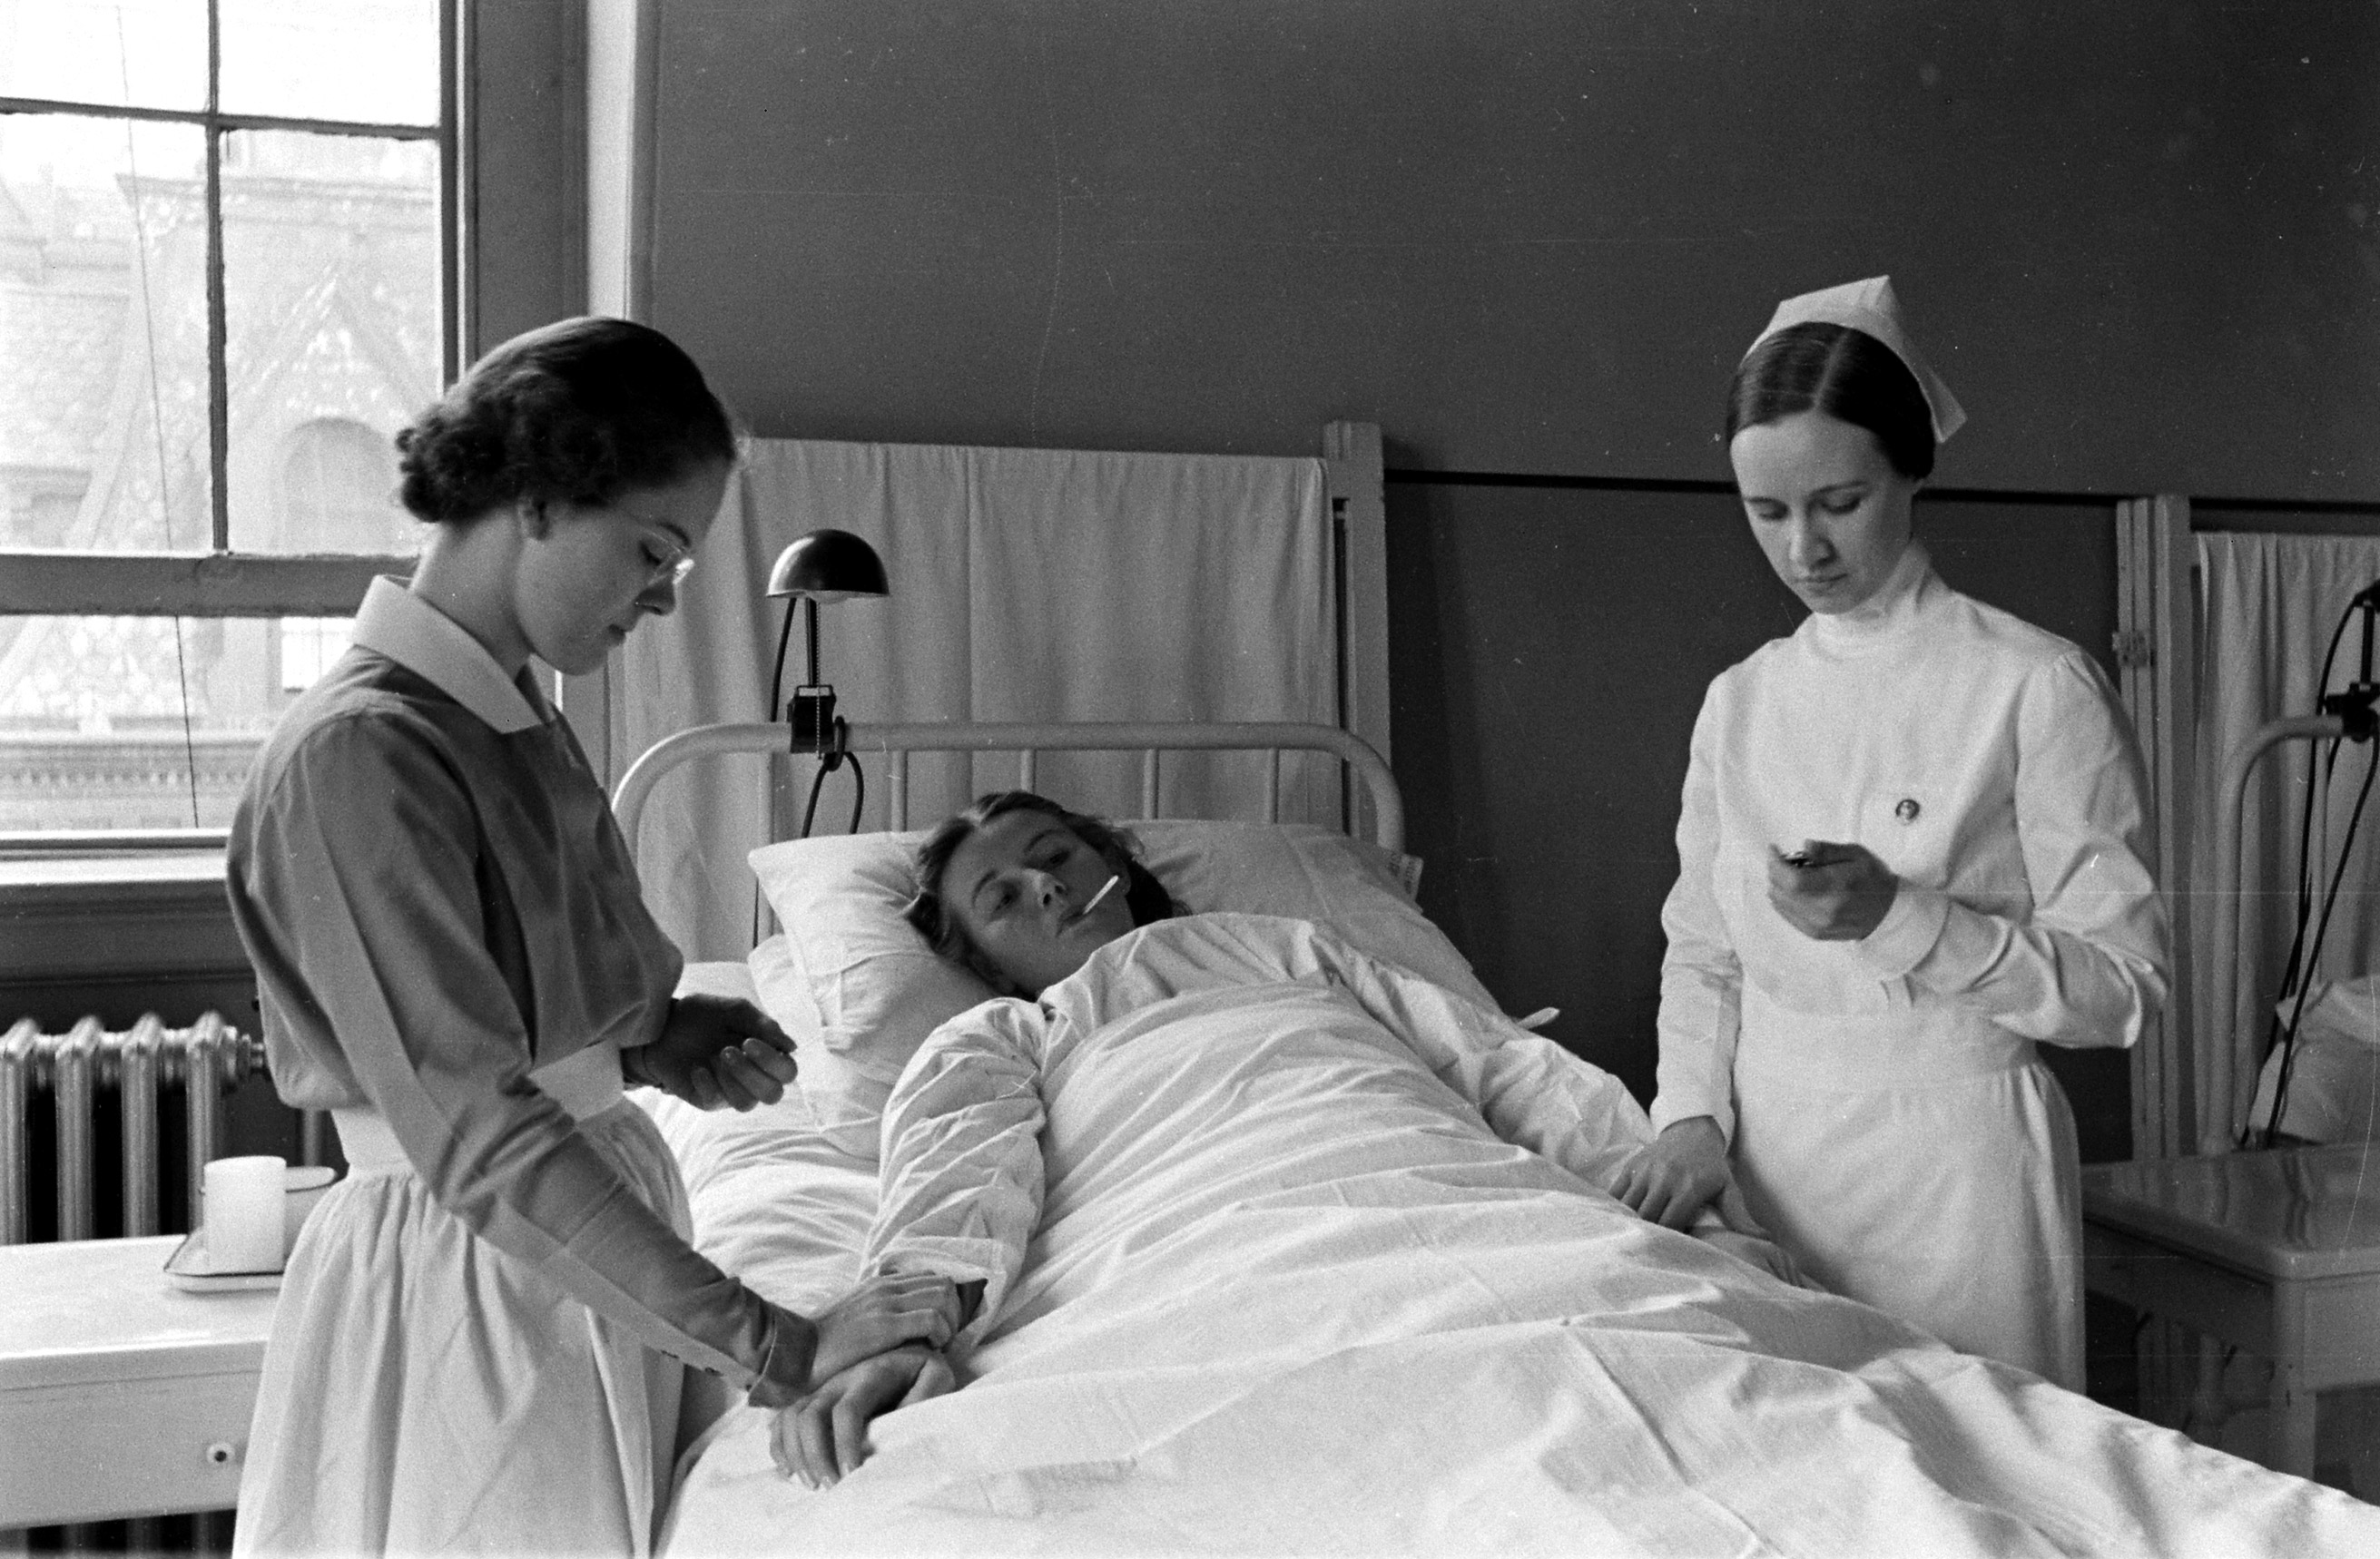 Student nurses at New York's Roosevelt Hospital, 1938.